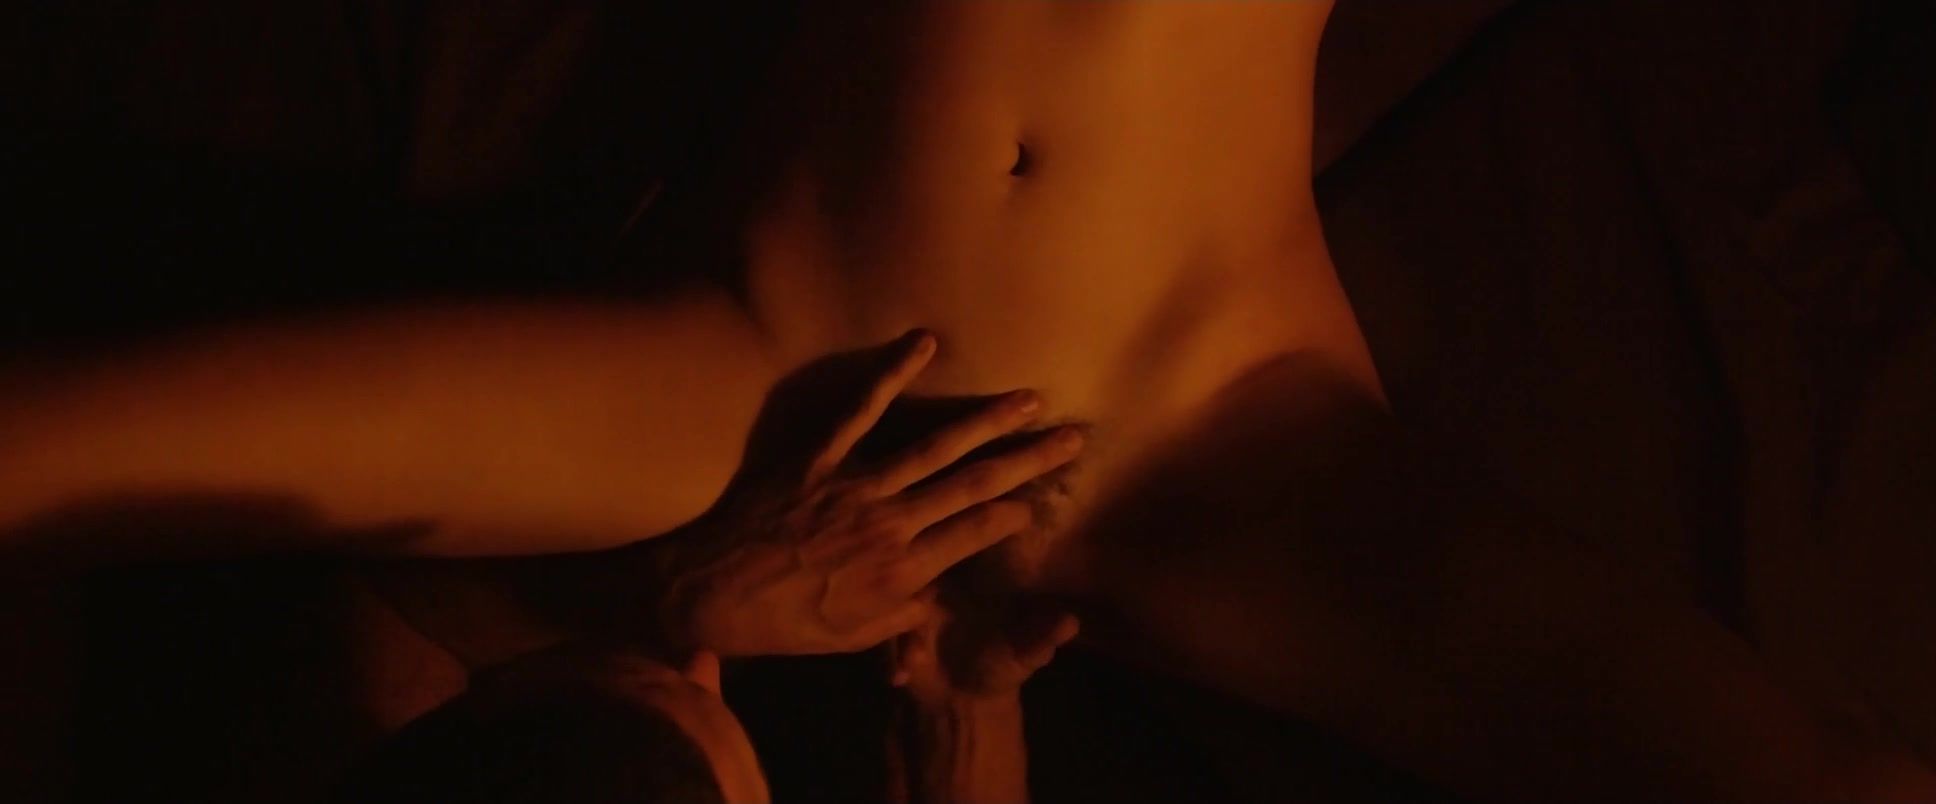 Goth Best Mainstream Adult Film | Explicit Uncensored Sex Scenes of the movie "Love" Squirters